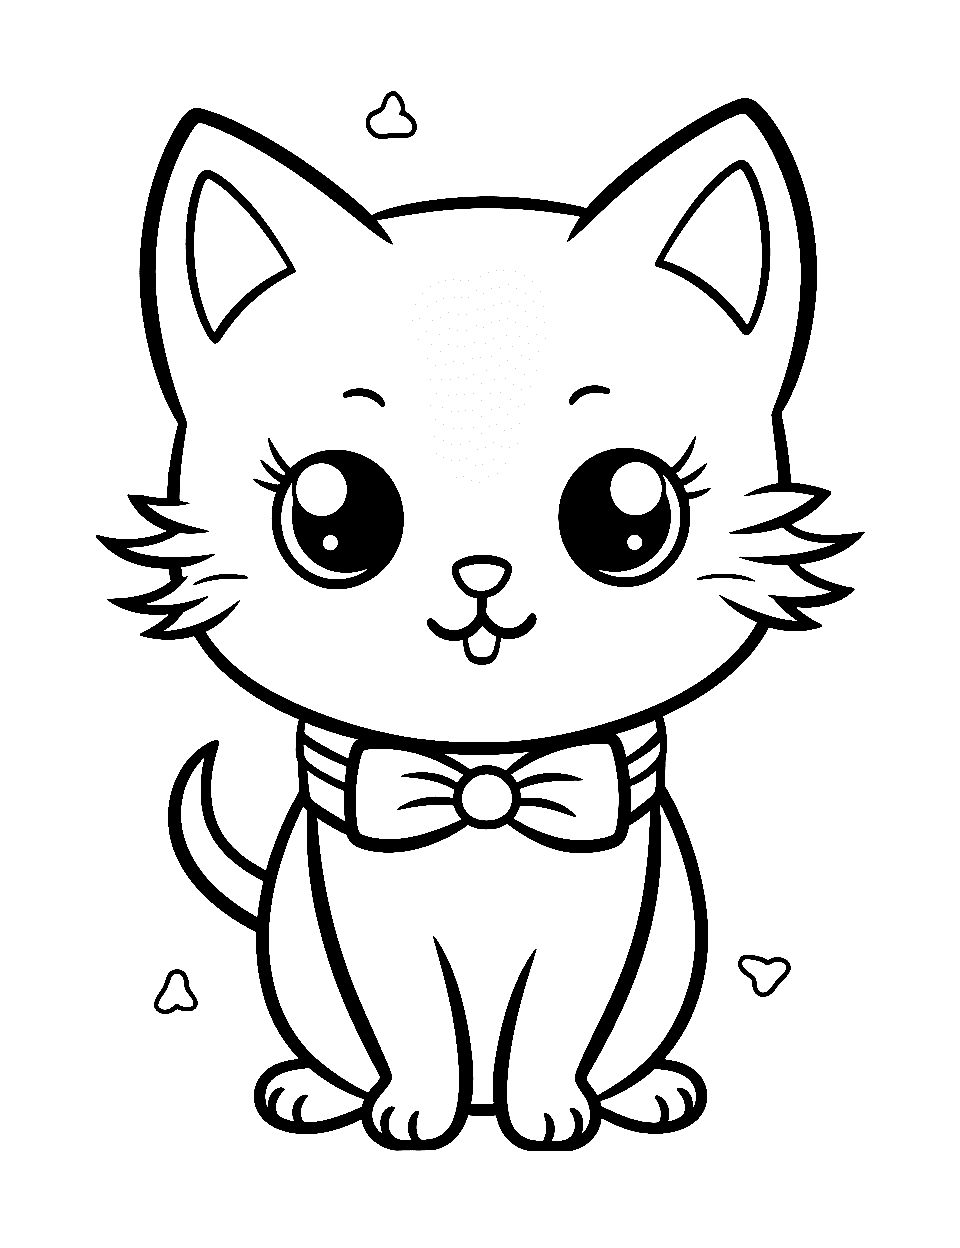 Kawaii Kitty's Sparkling Eyes Kitten Coloring Page - Kawaii kitten with sparkling eyes.